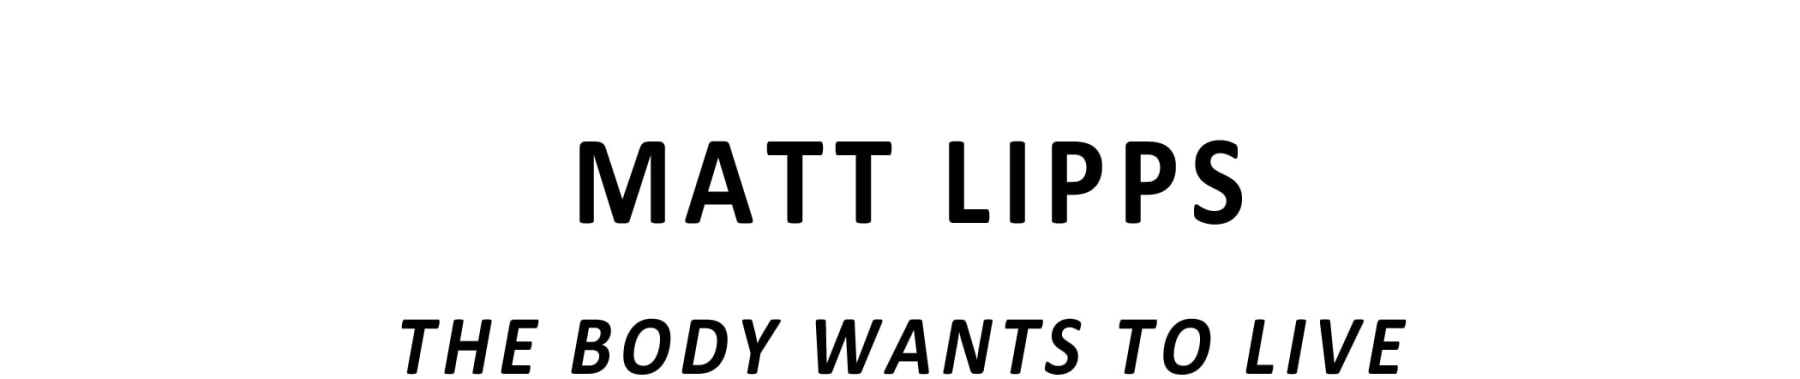 Matt Lipps - The Body Wants to Live - Viewing Room - Marc Selwyn Fine Art Viewing Room